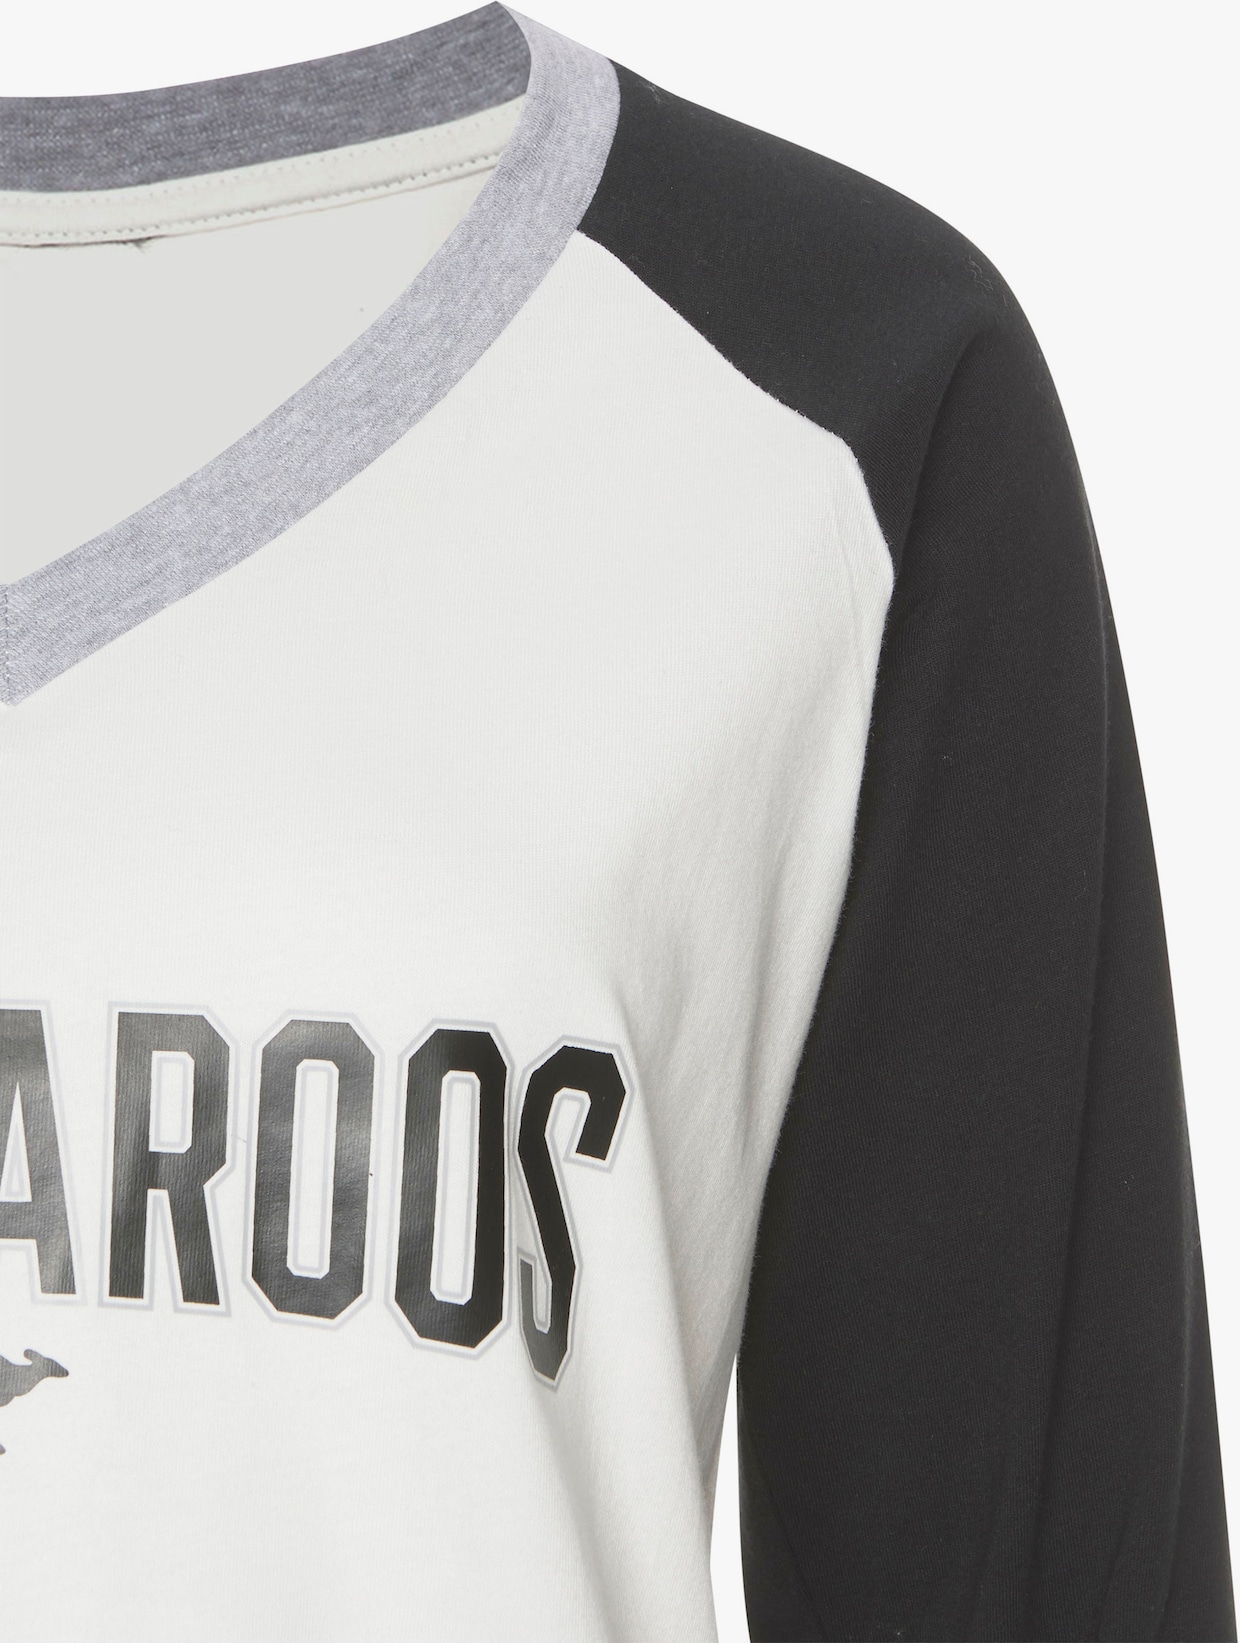 KangaROOS Pyjama - schwarz-weiß